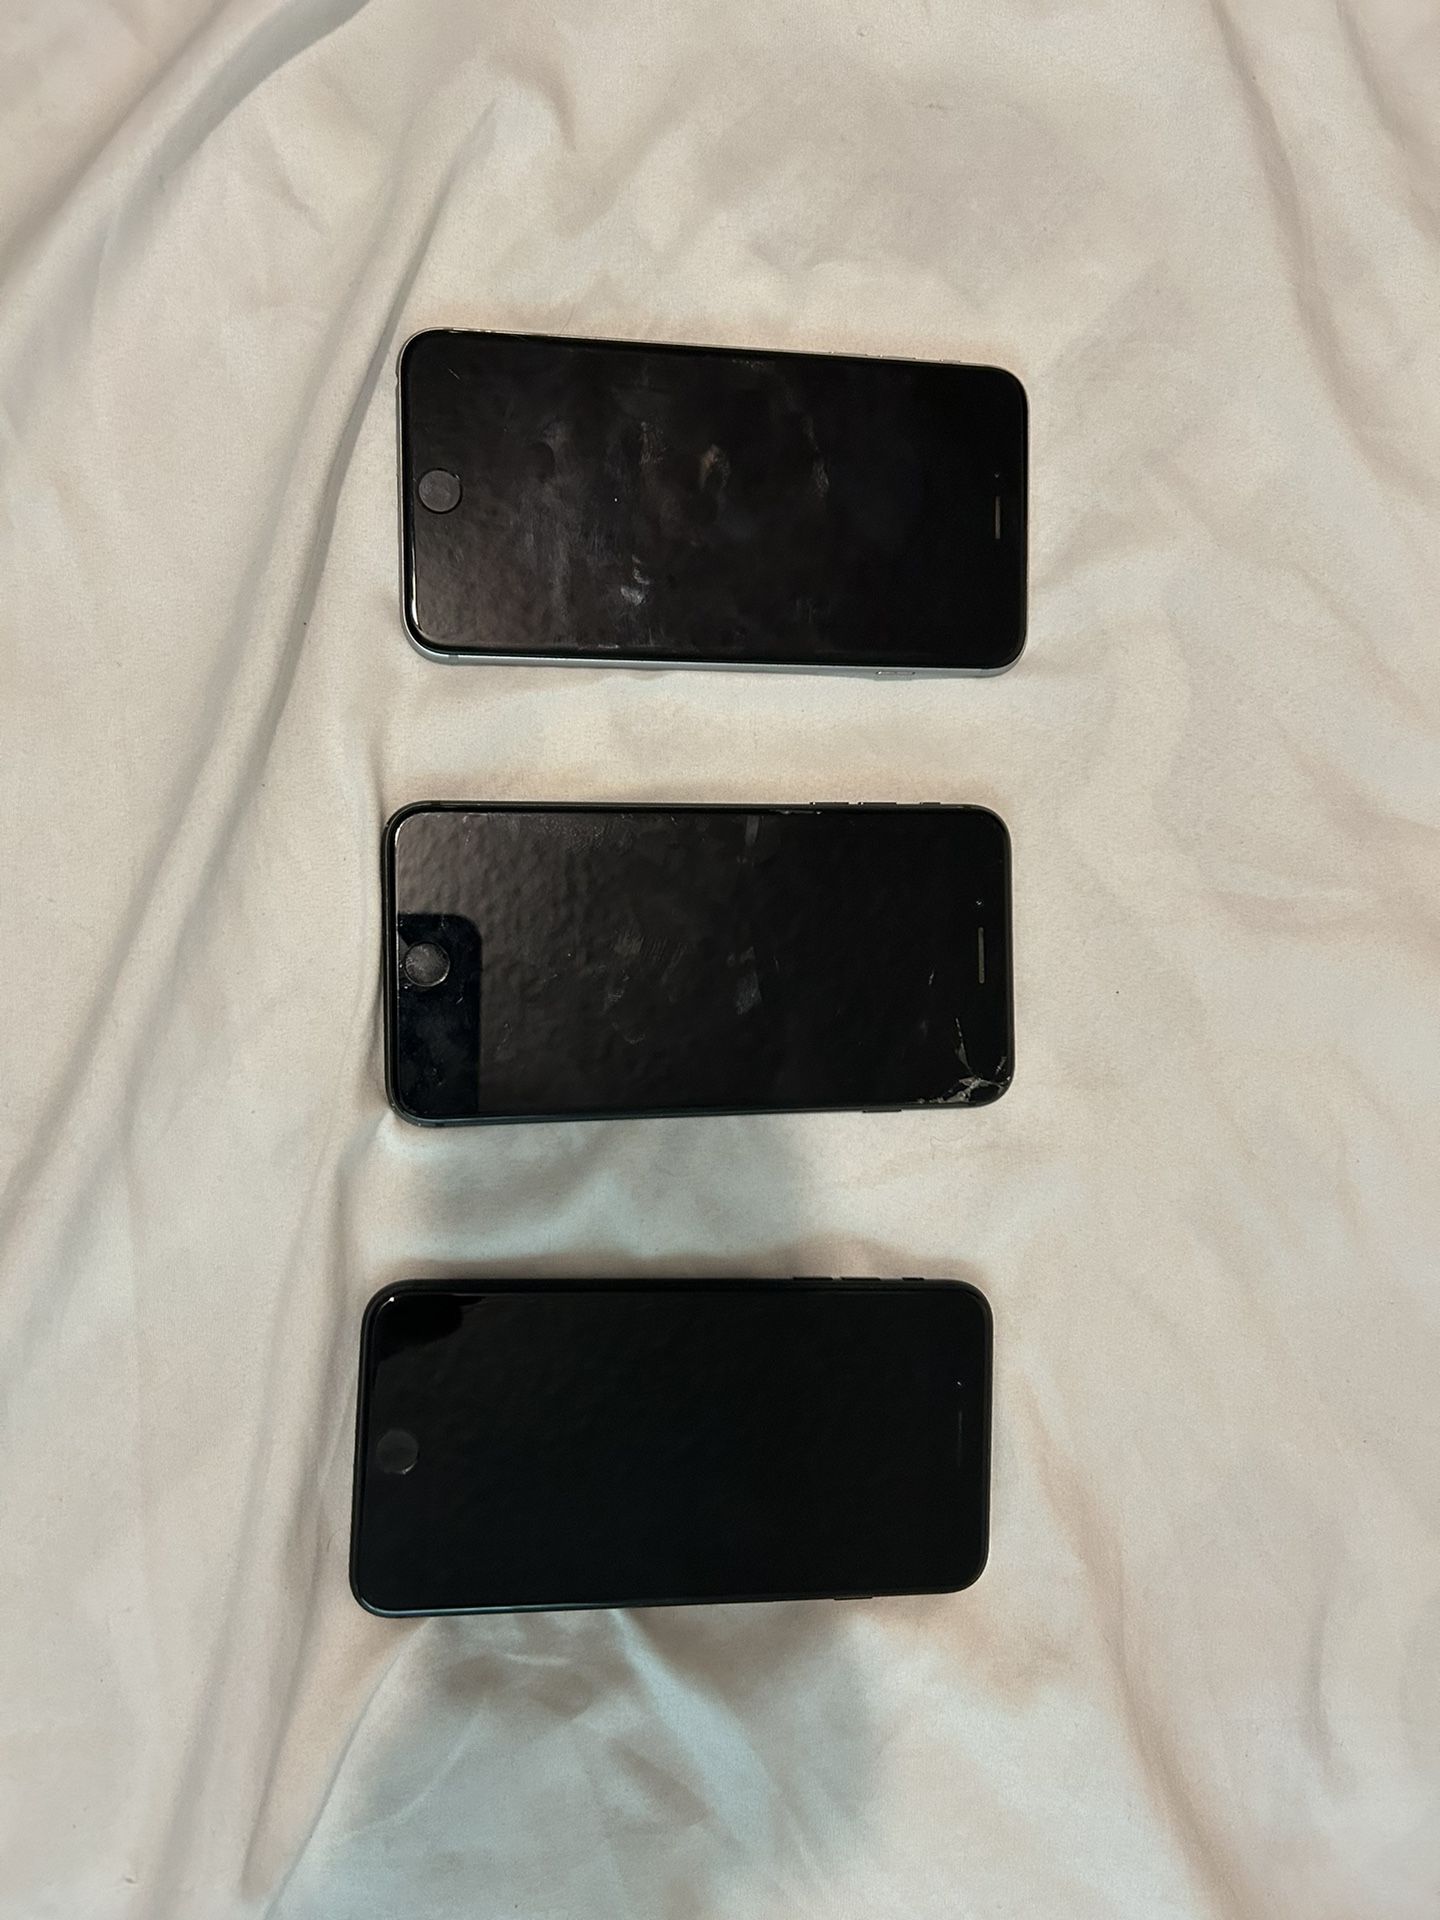 3 iphones 6/7   (activation locked)